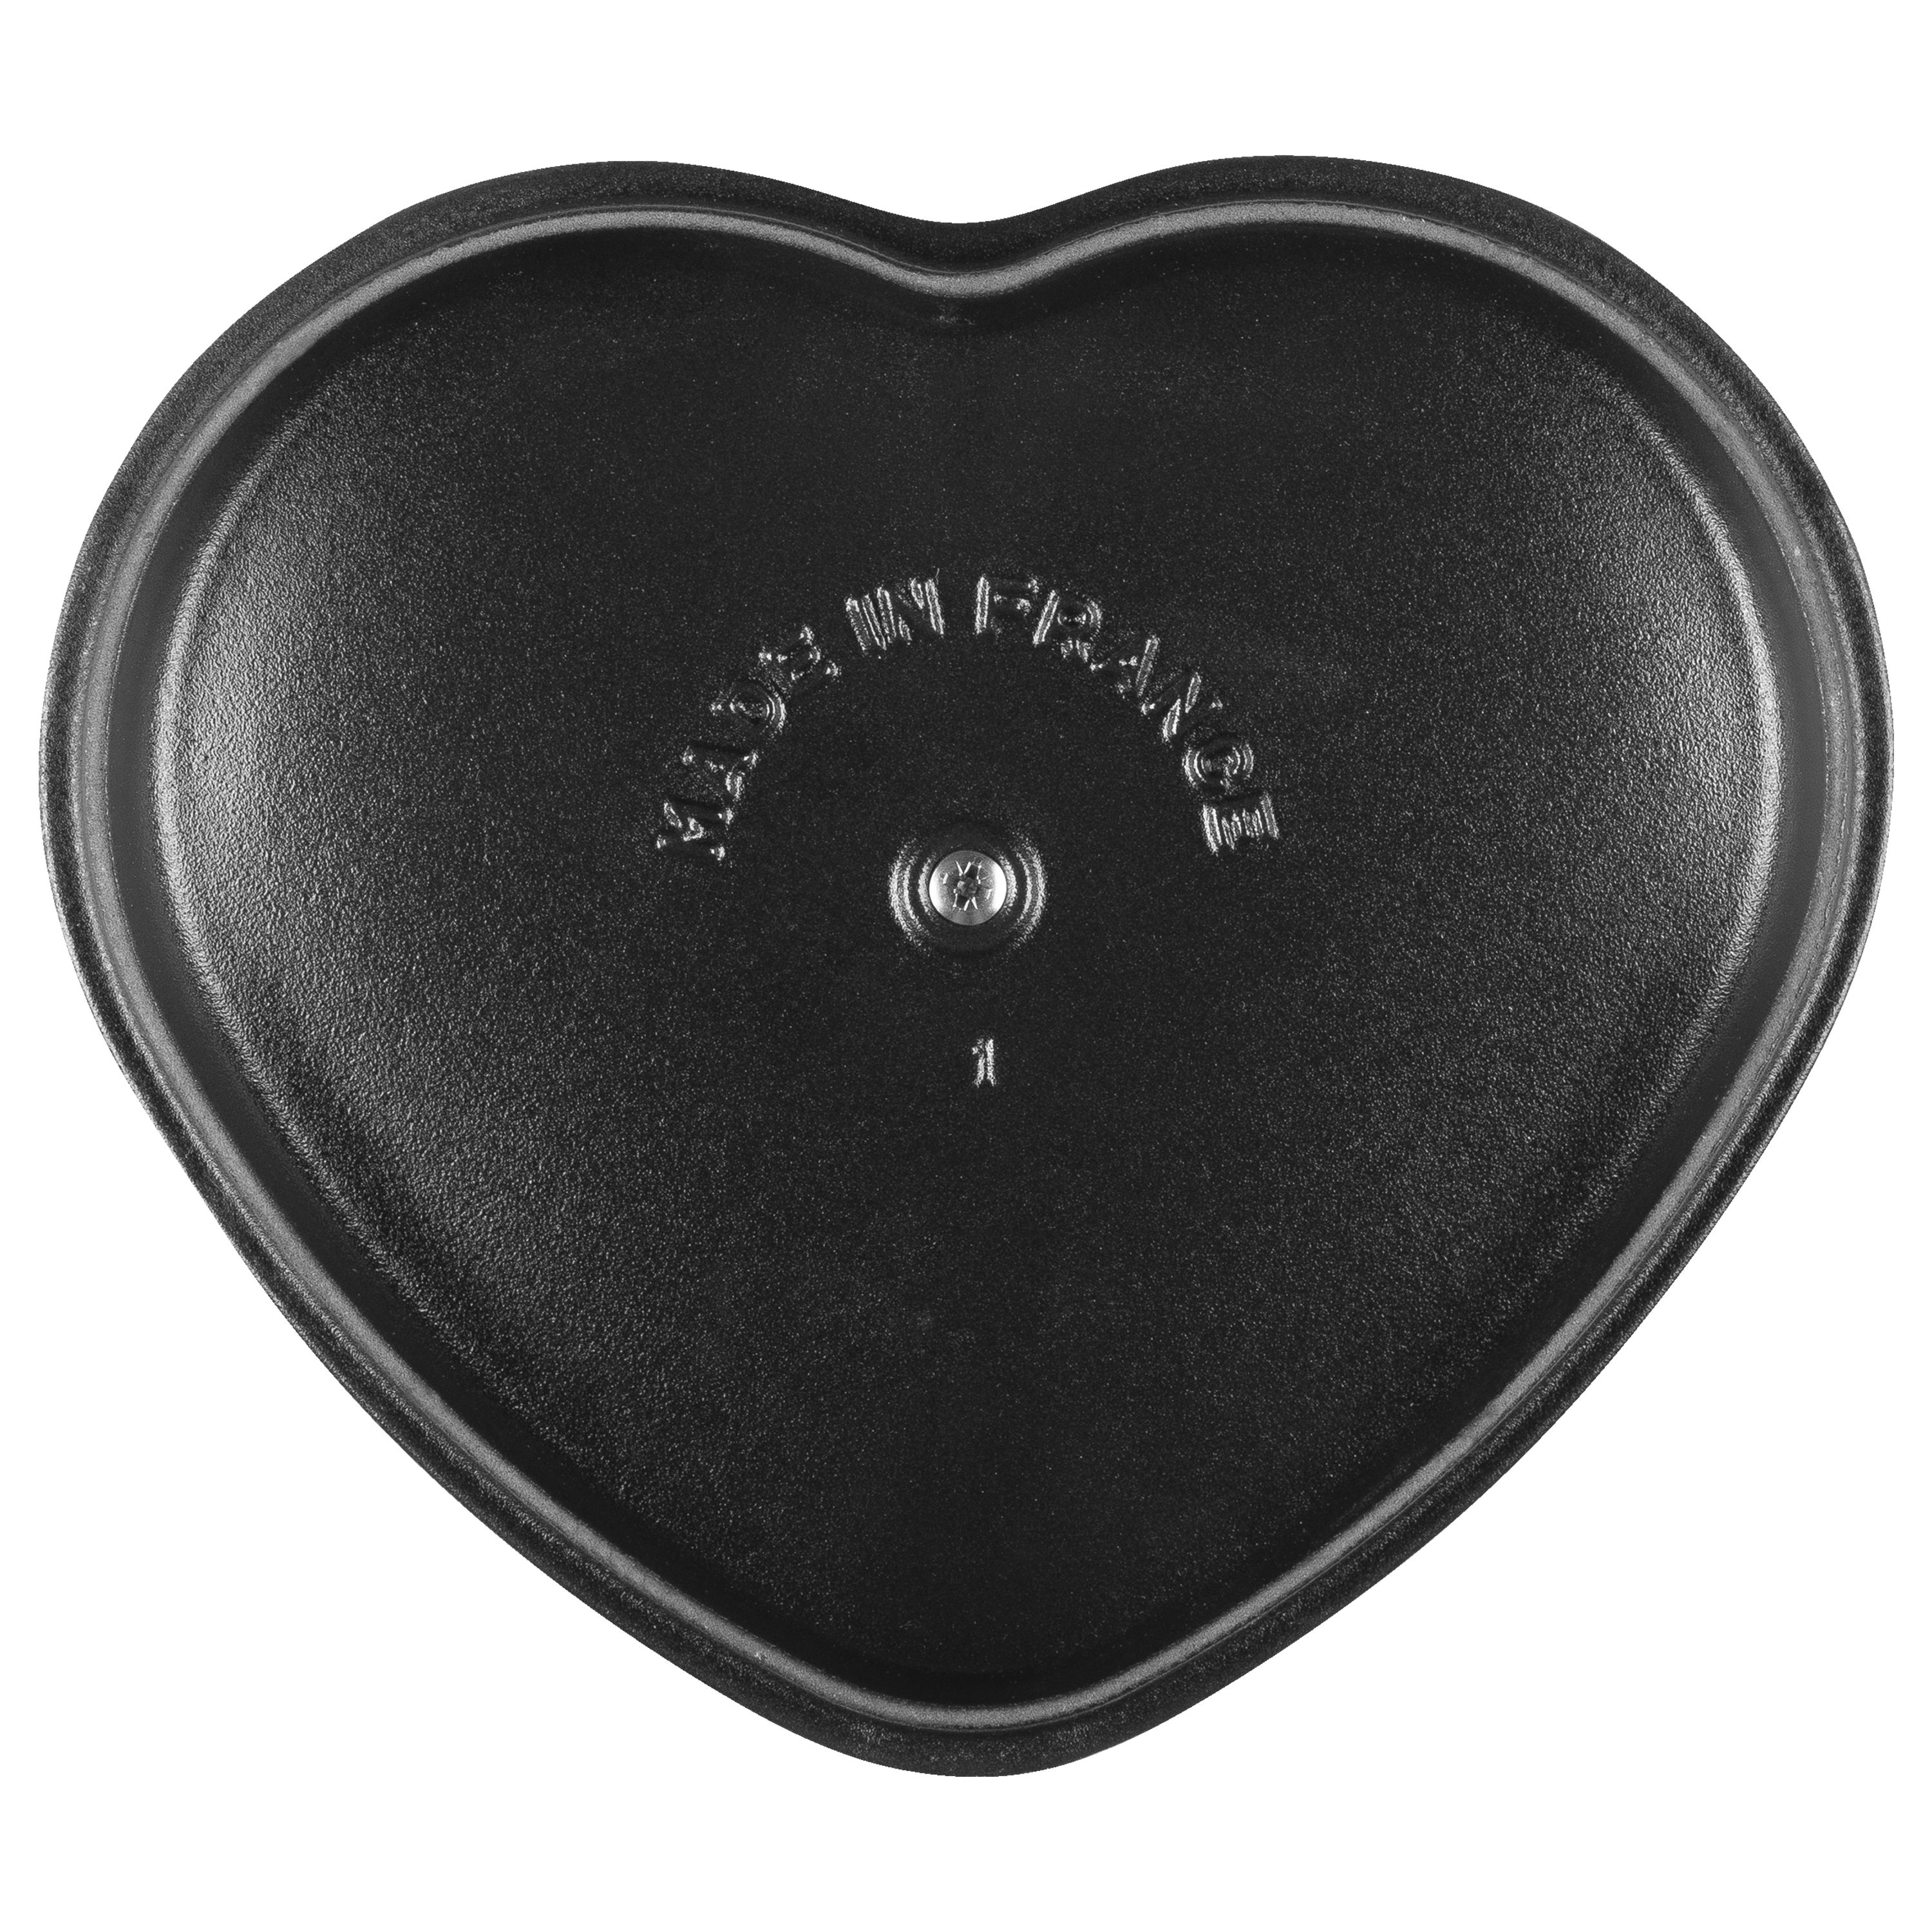 heart shape mini cast iron electric